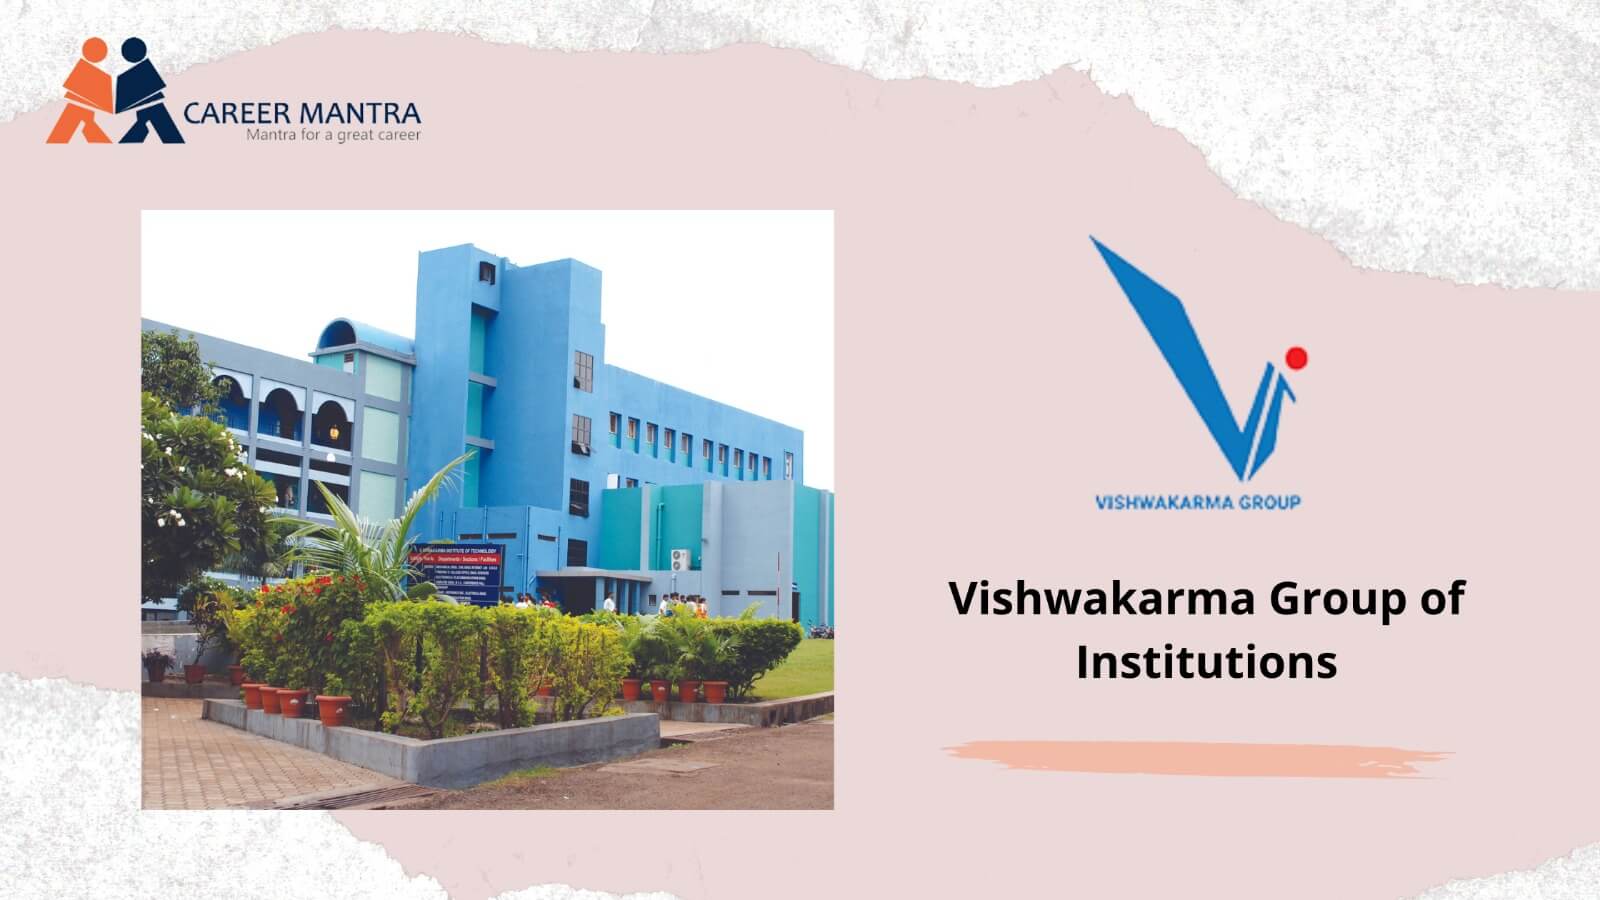 https://www.careermantra.net/blog/vishwakarma-group-of-institutions/